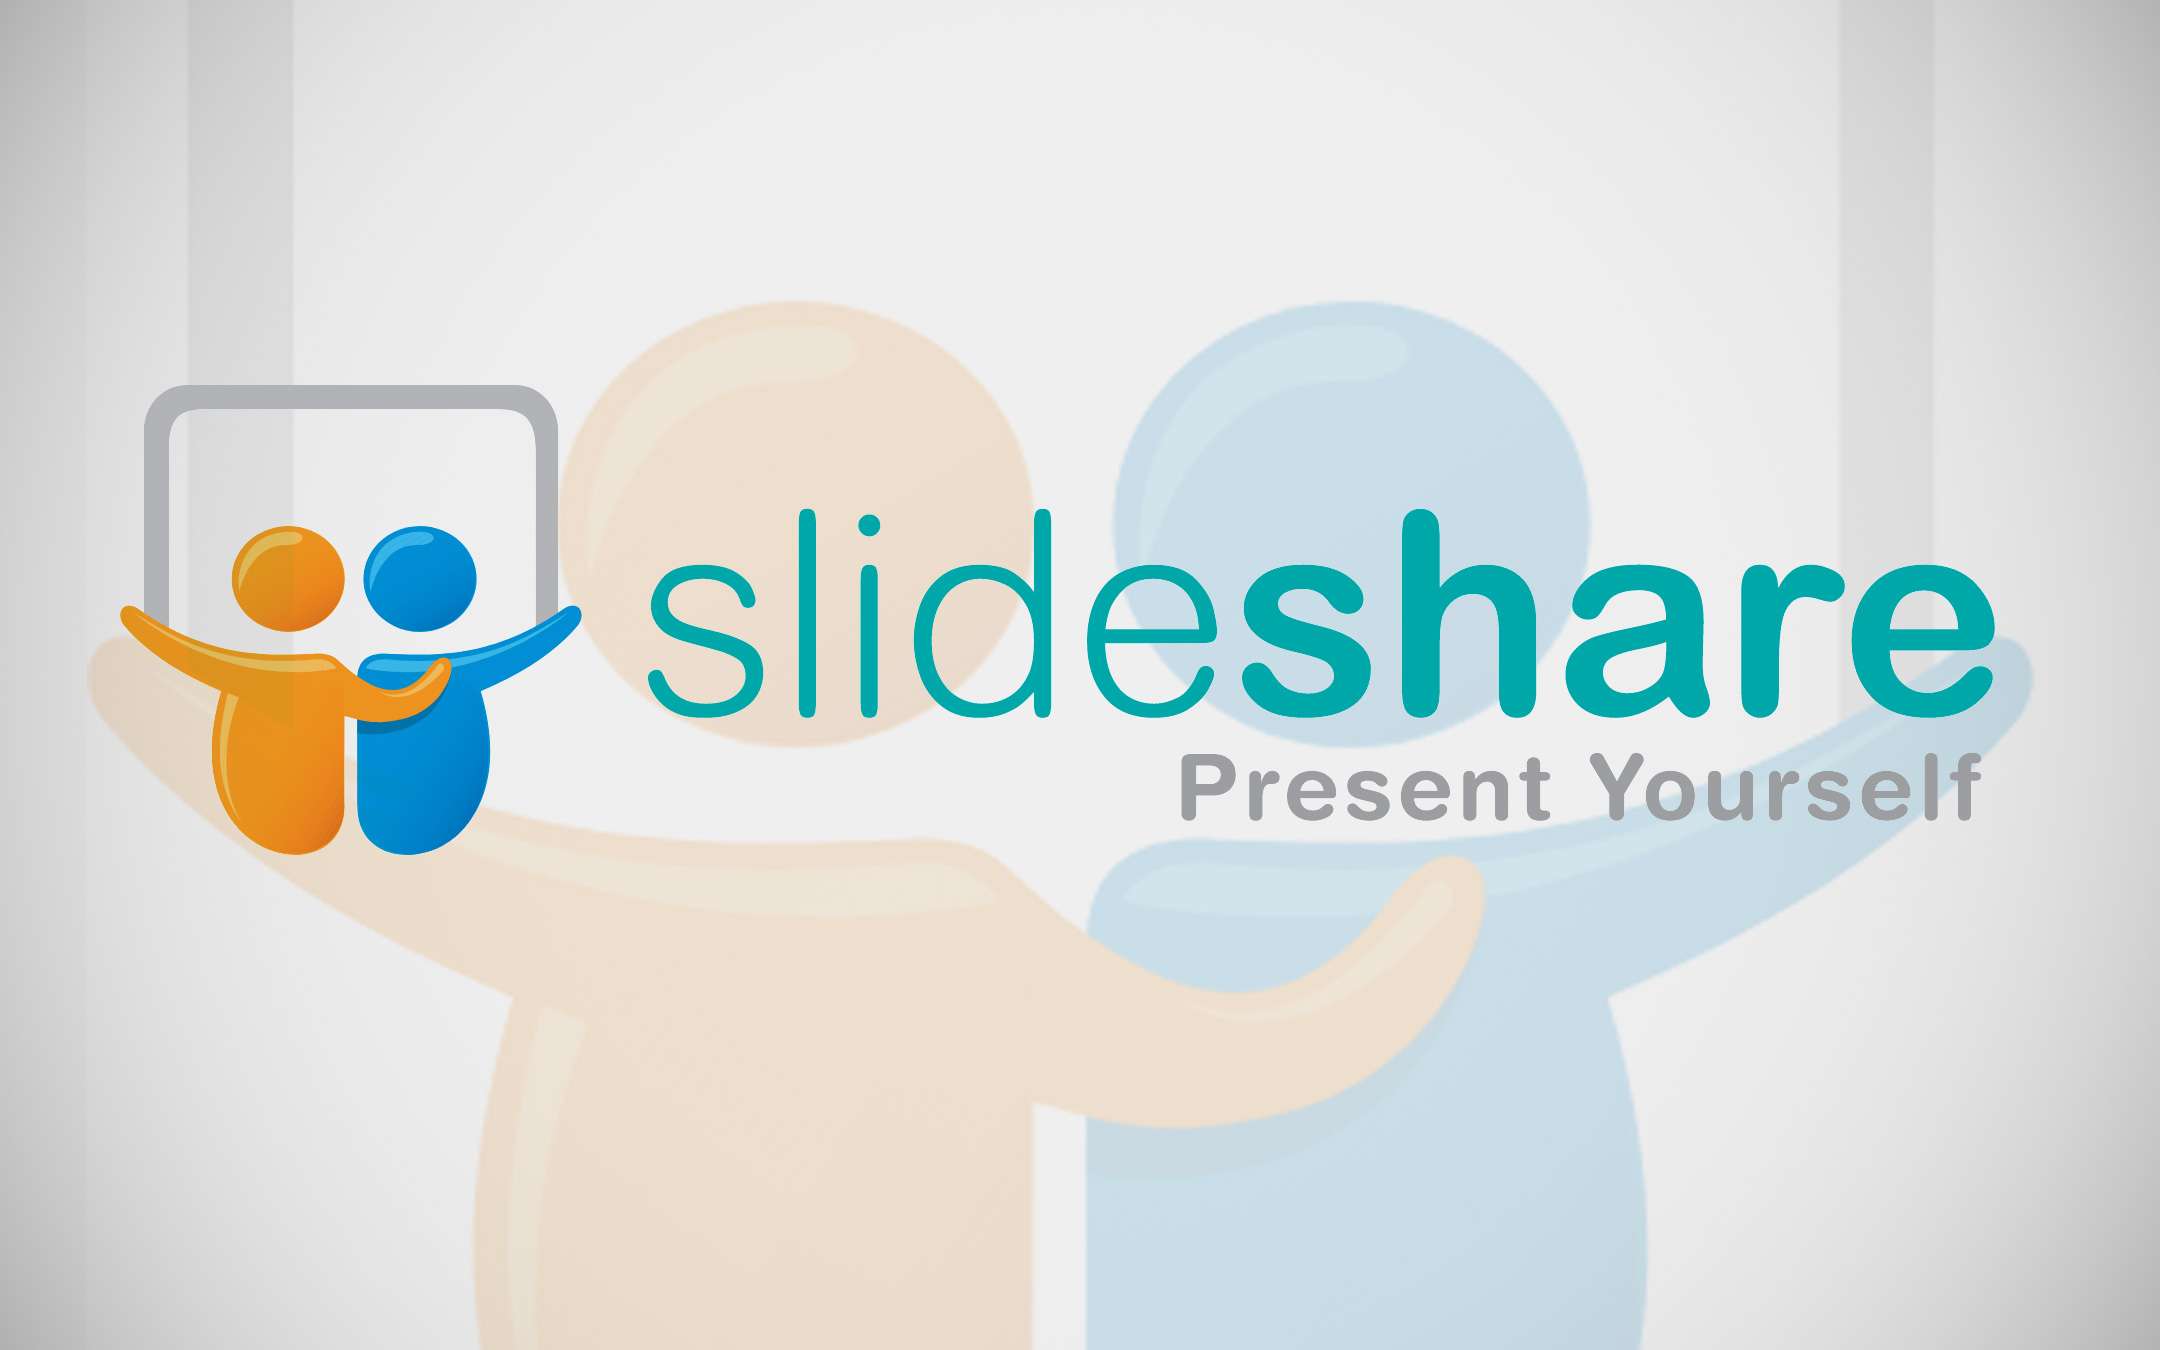 LinkedIn (Microsoft) sells SlideShare to Scribd